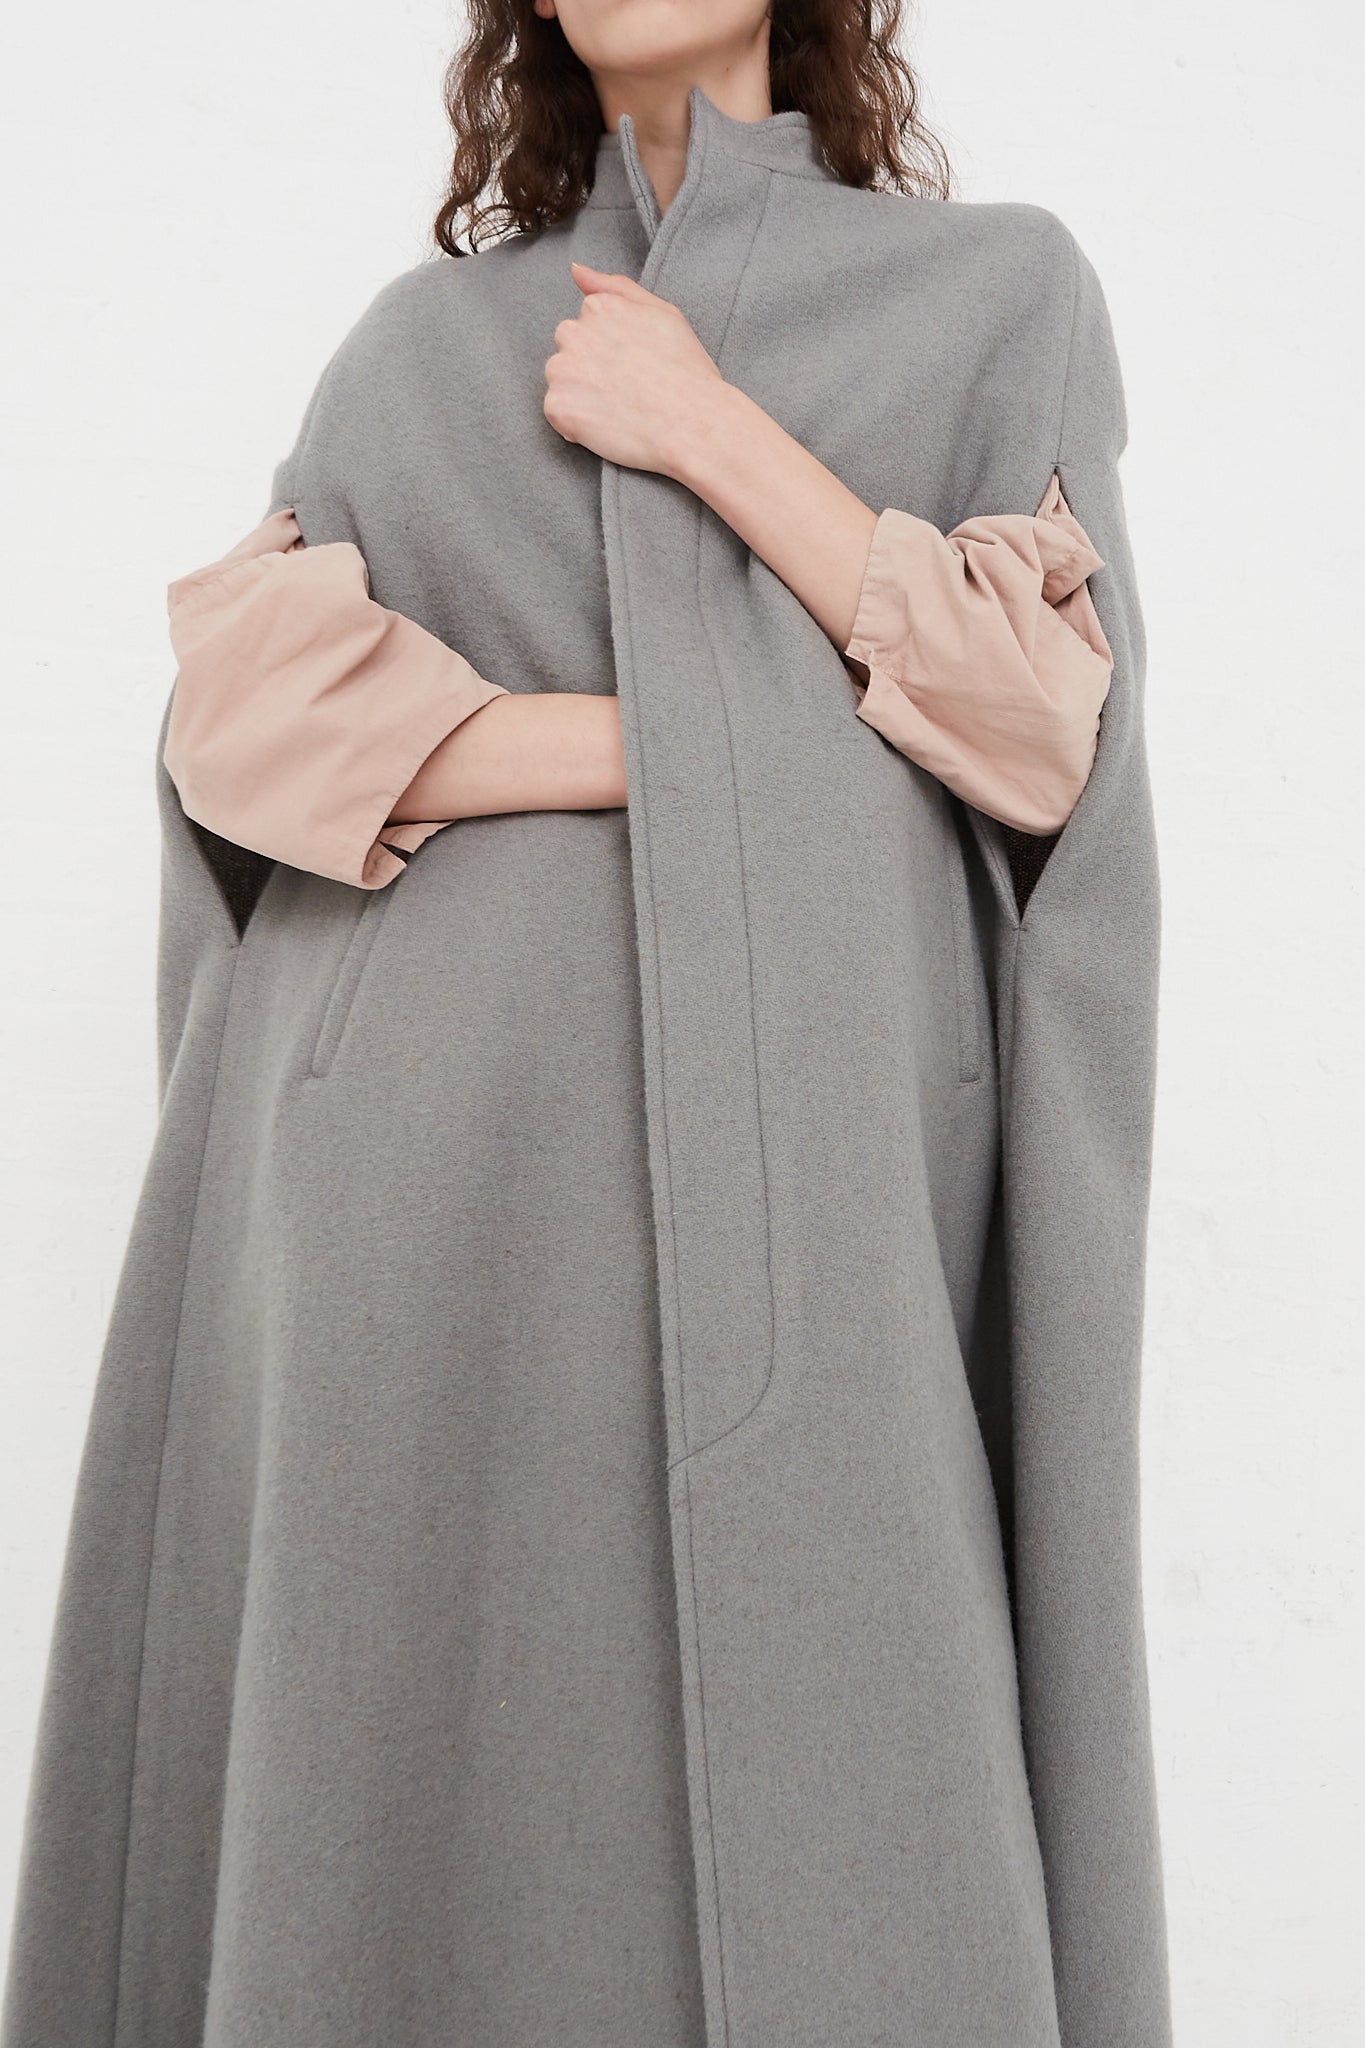 The model is wearing a Japanese Suffolk Melton Cloak in Grey made by Cosmic Wonder.